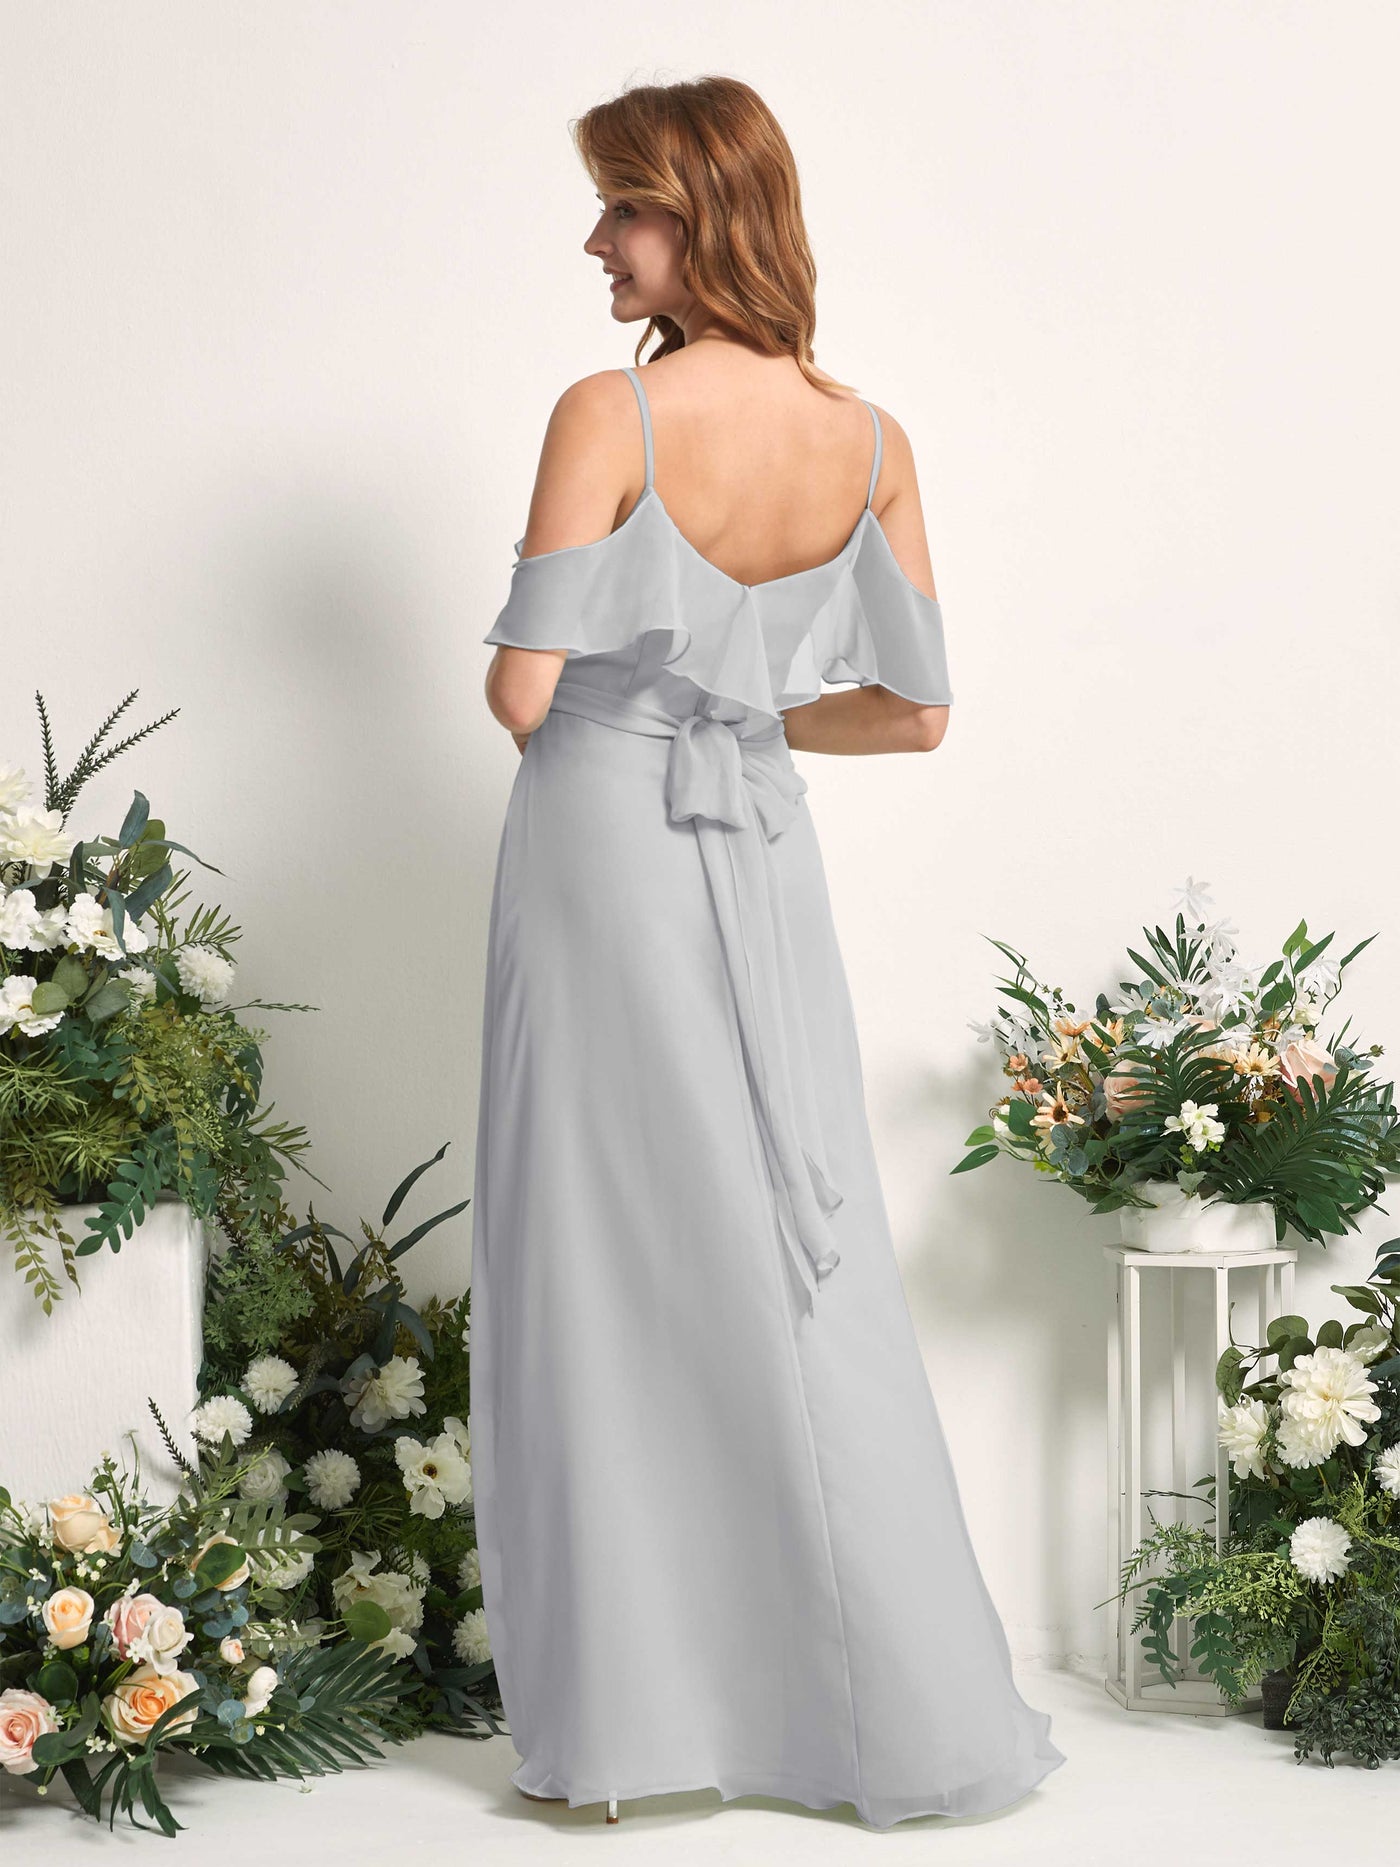 Bridesmaid Dress A-line Chiffon Spaghetti-straps Full Length Sleeveless Wedding Party Dress - Silver (81227427)#color_silver